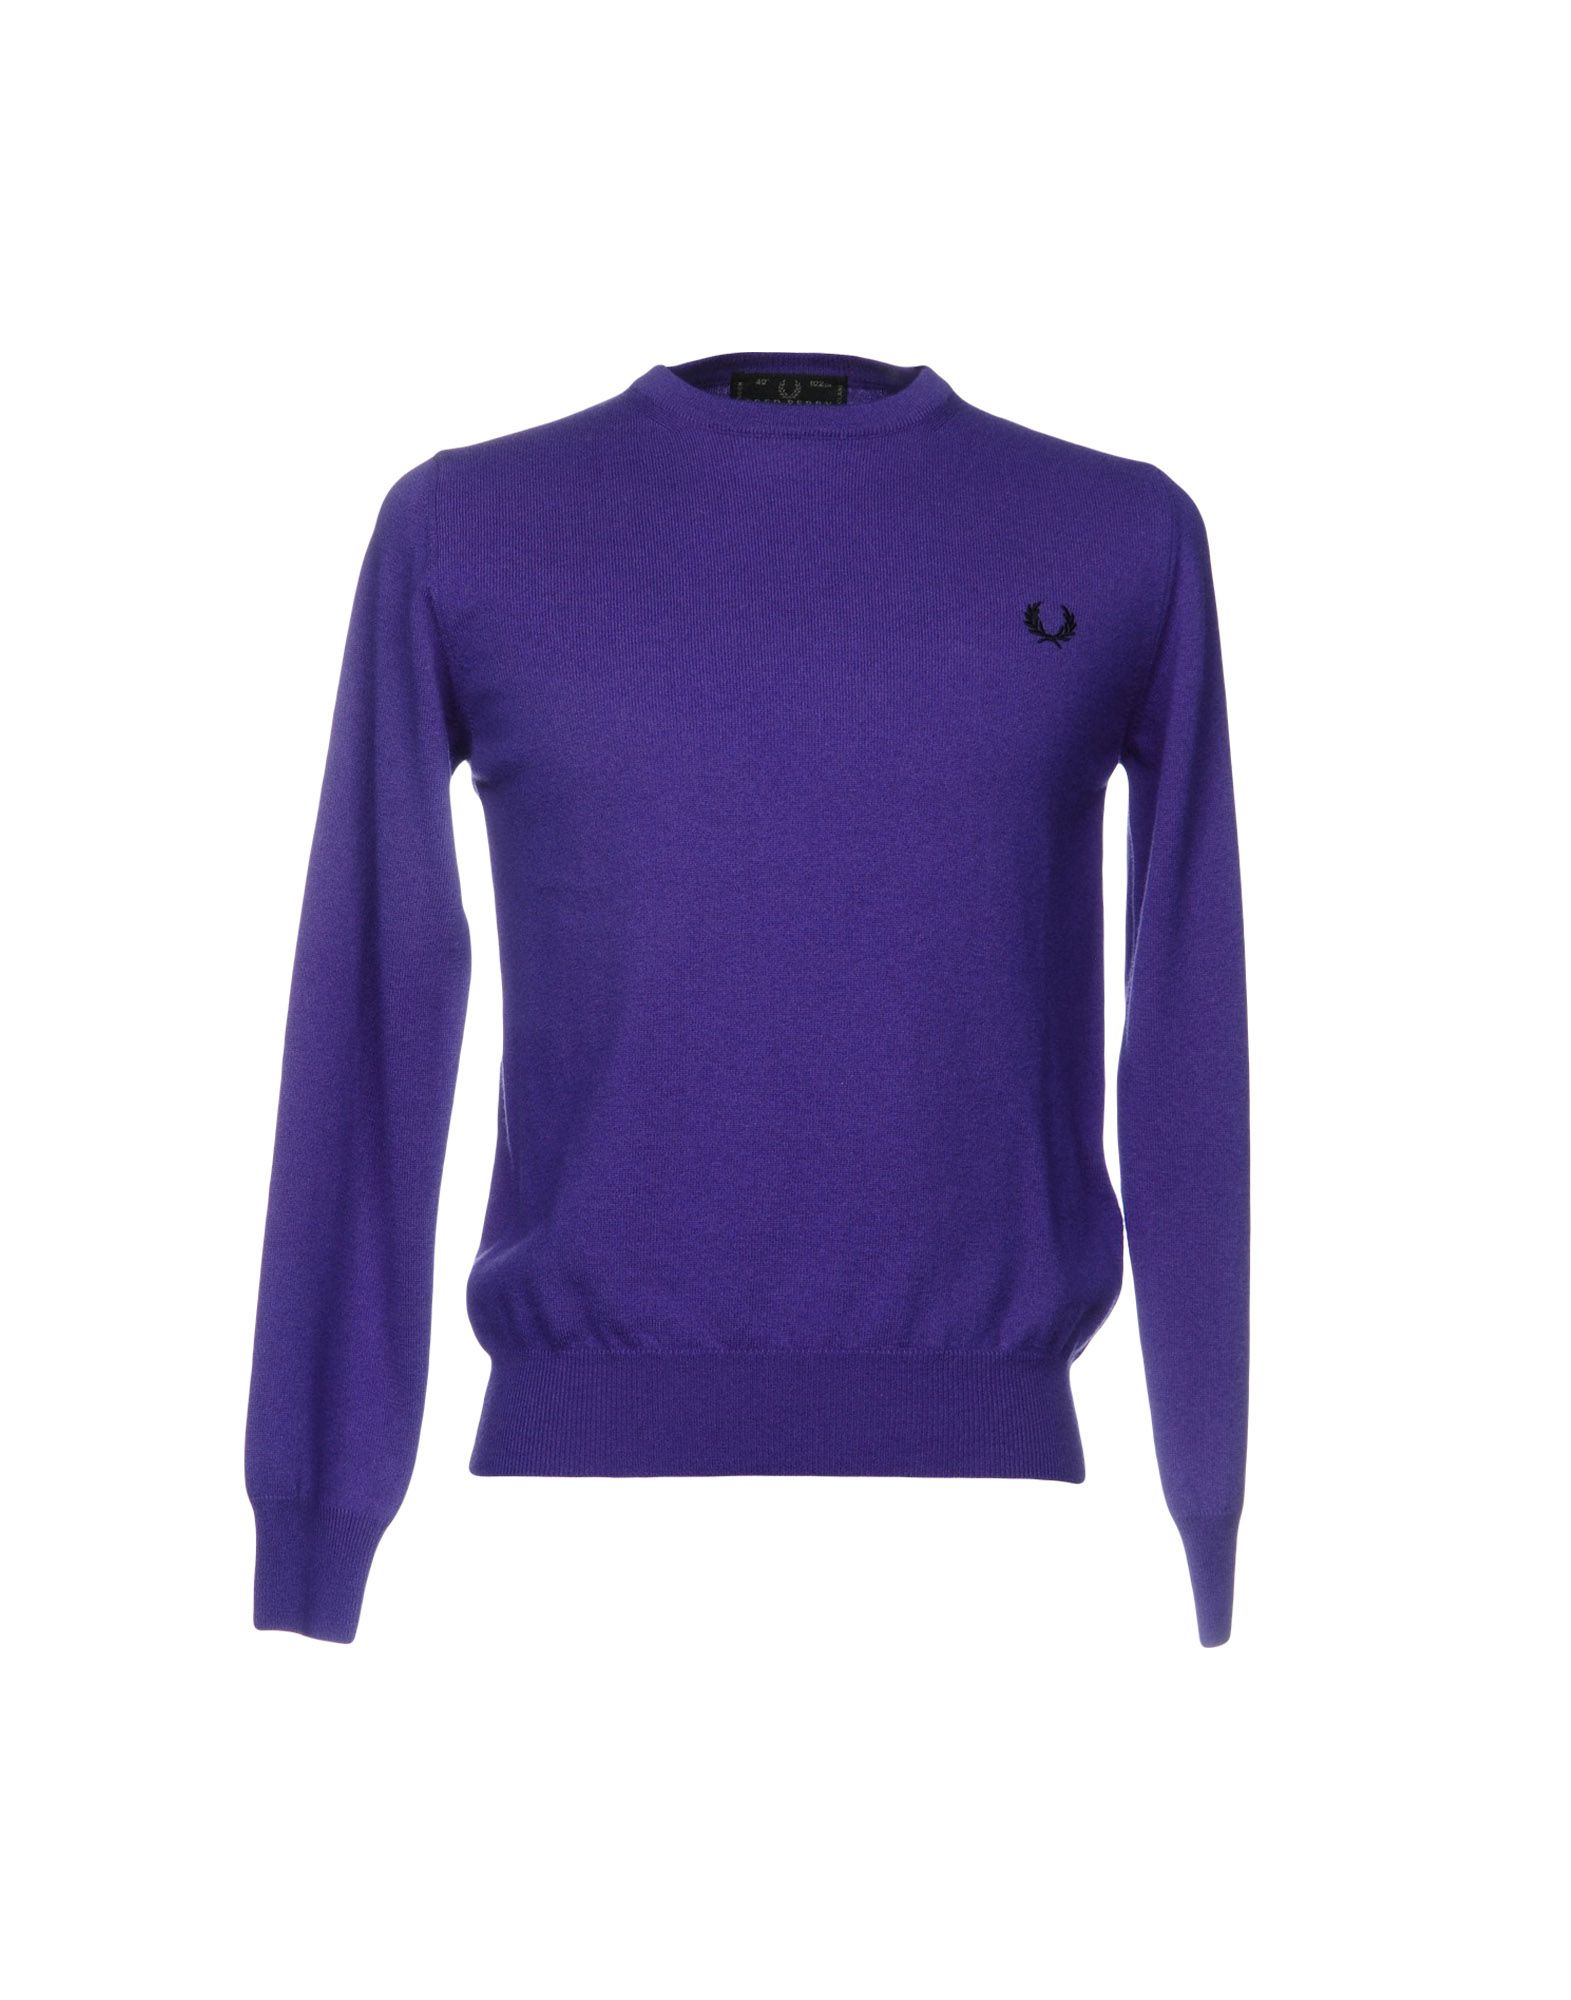 fred perry lilac sweatshirt